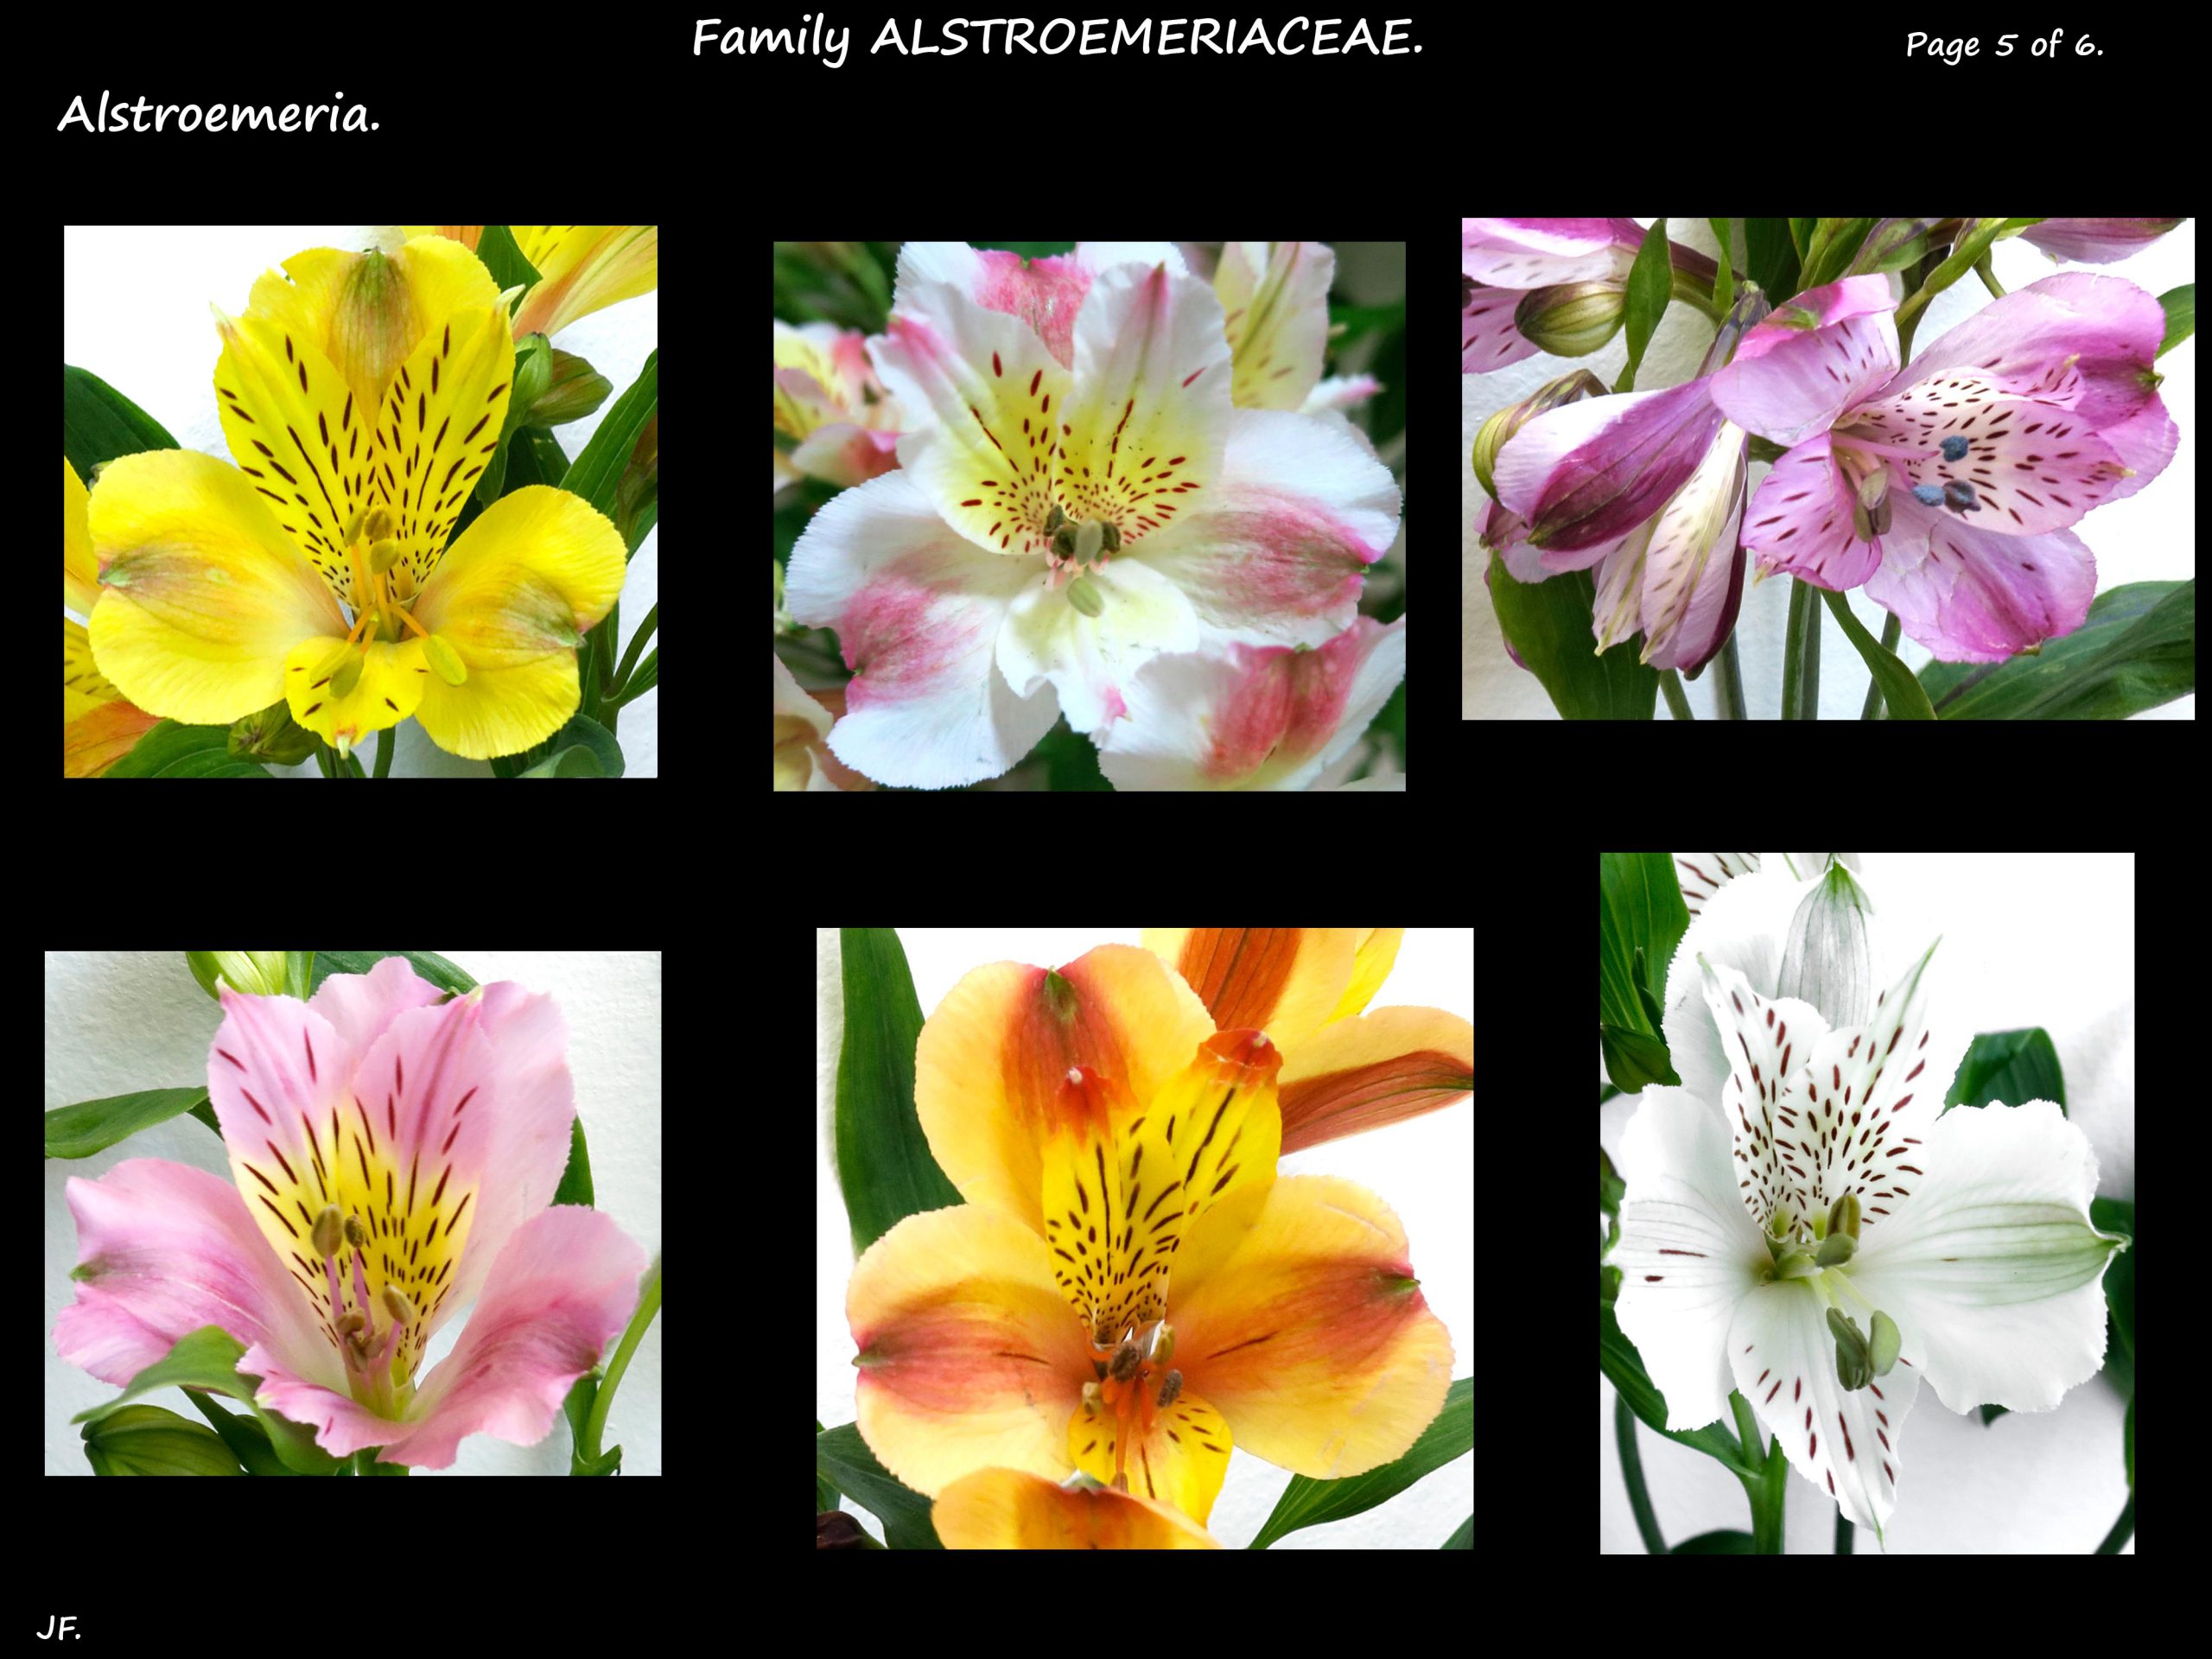 5 Alstroemeria varieties